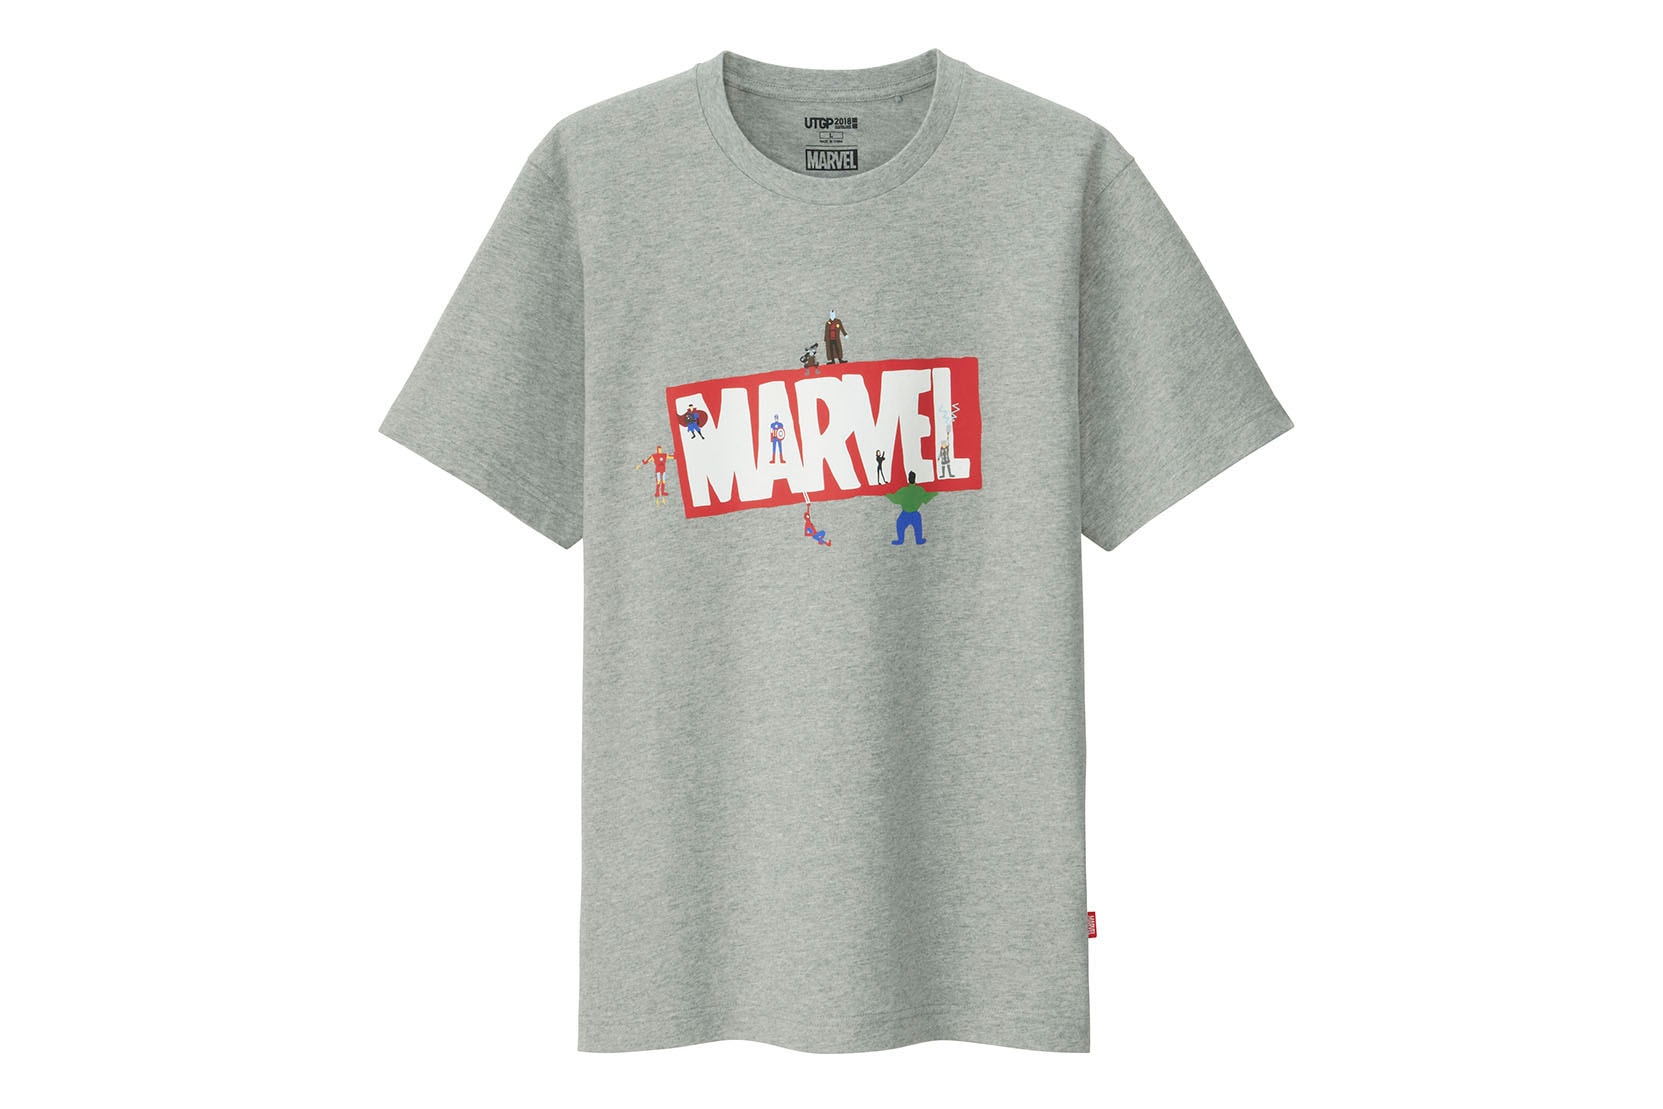 Uniqlo Marvel UT Grand Prix 2018 T-Shirt Collection Captain America Iron Man Spiderman Hulk Guardians of The Galaxy